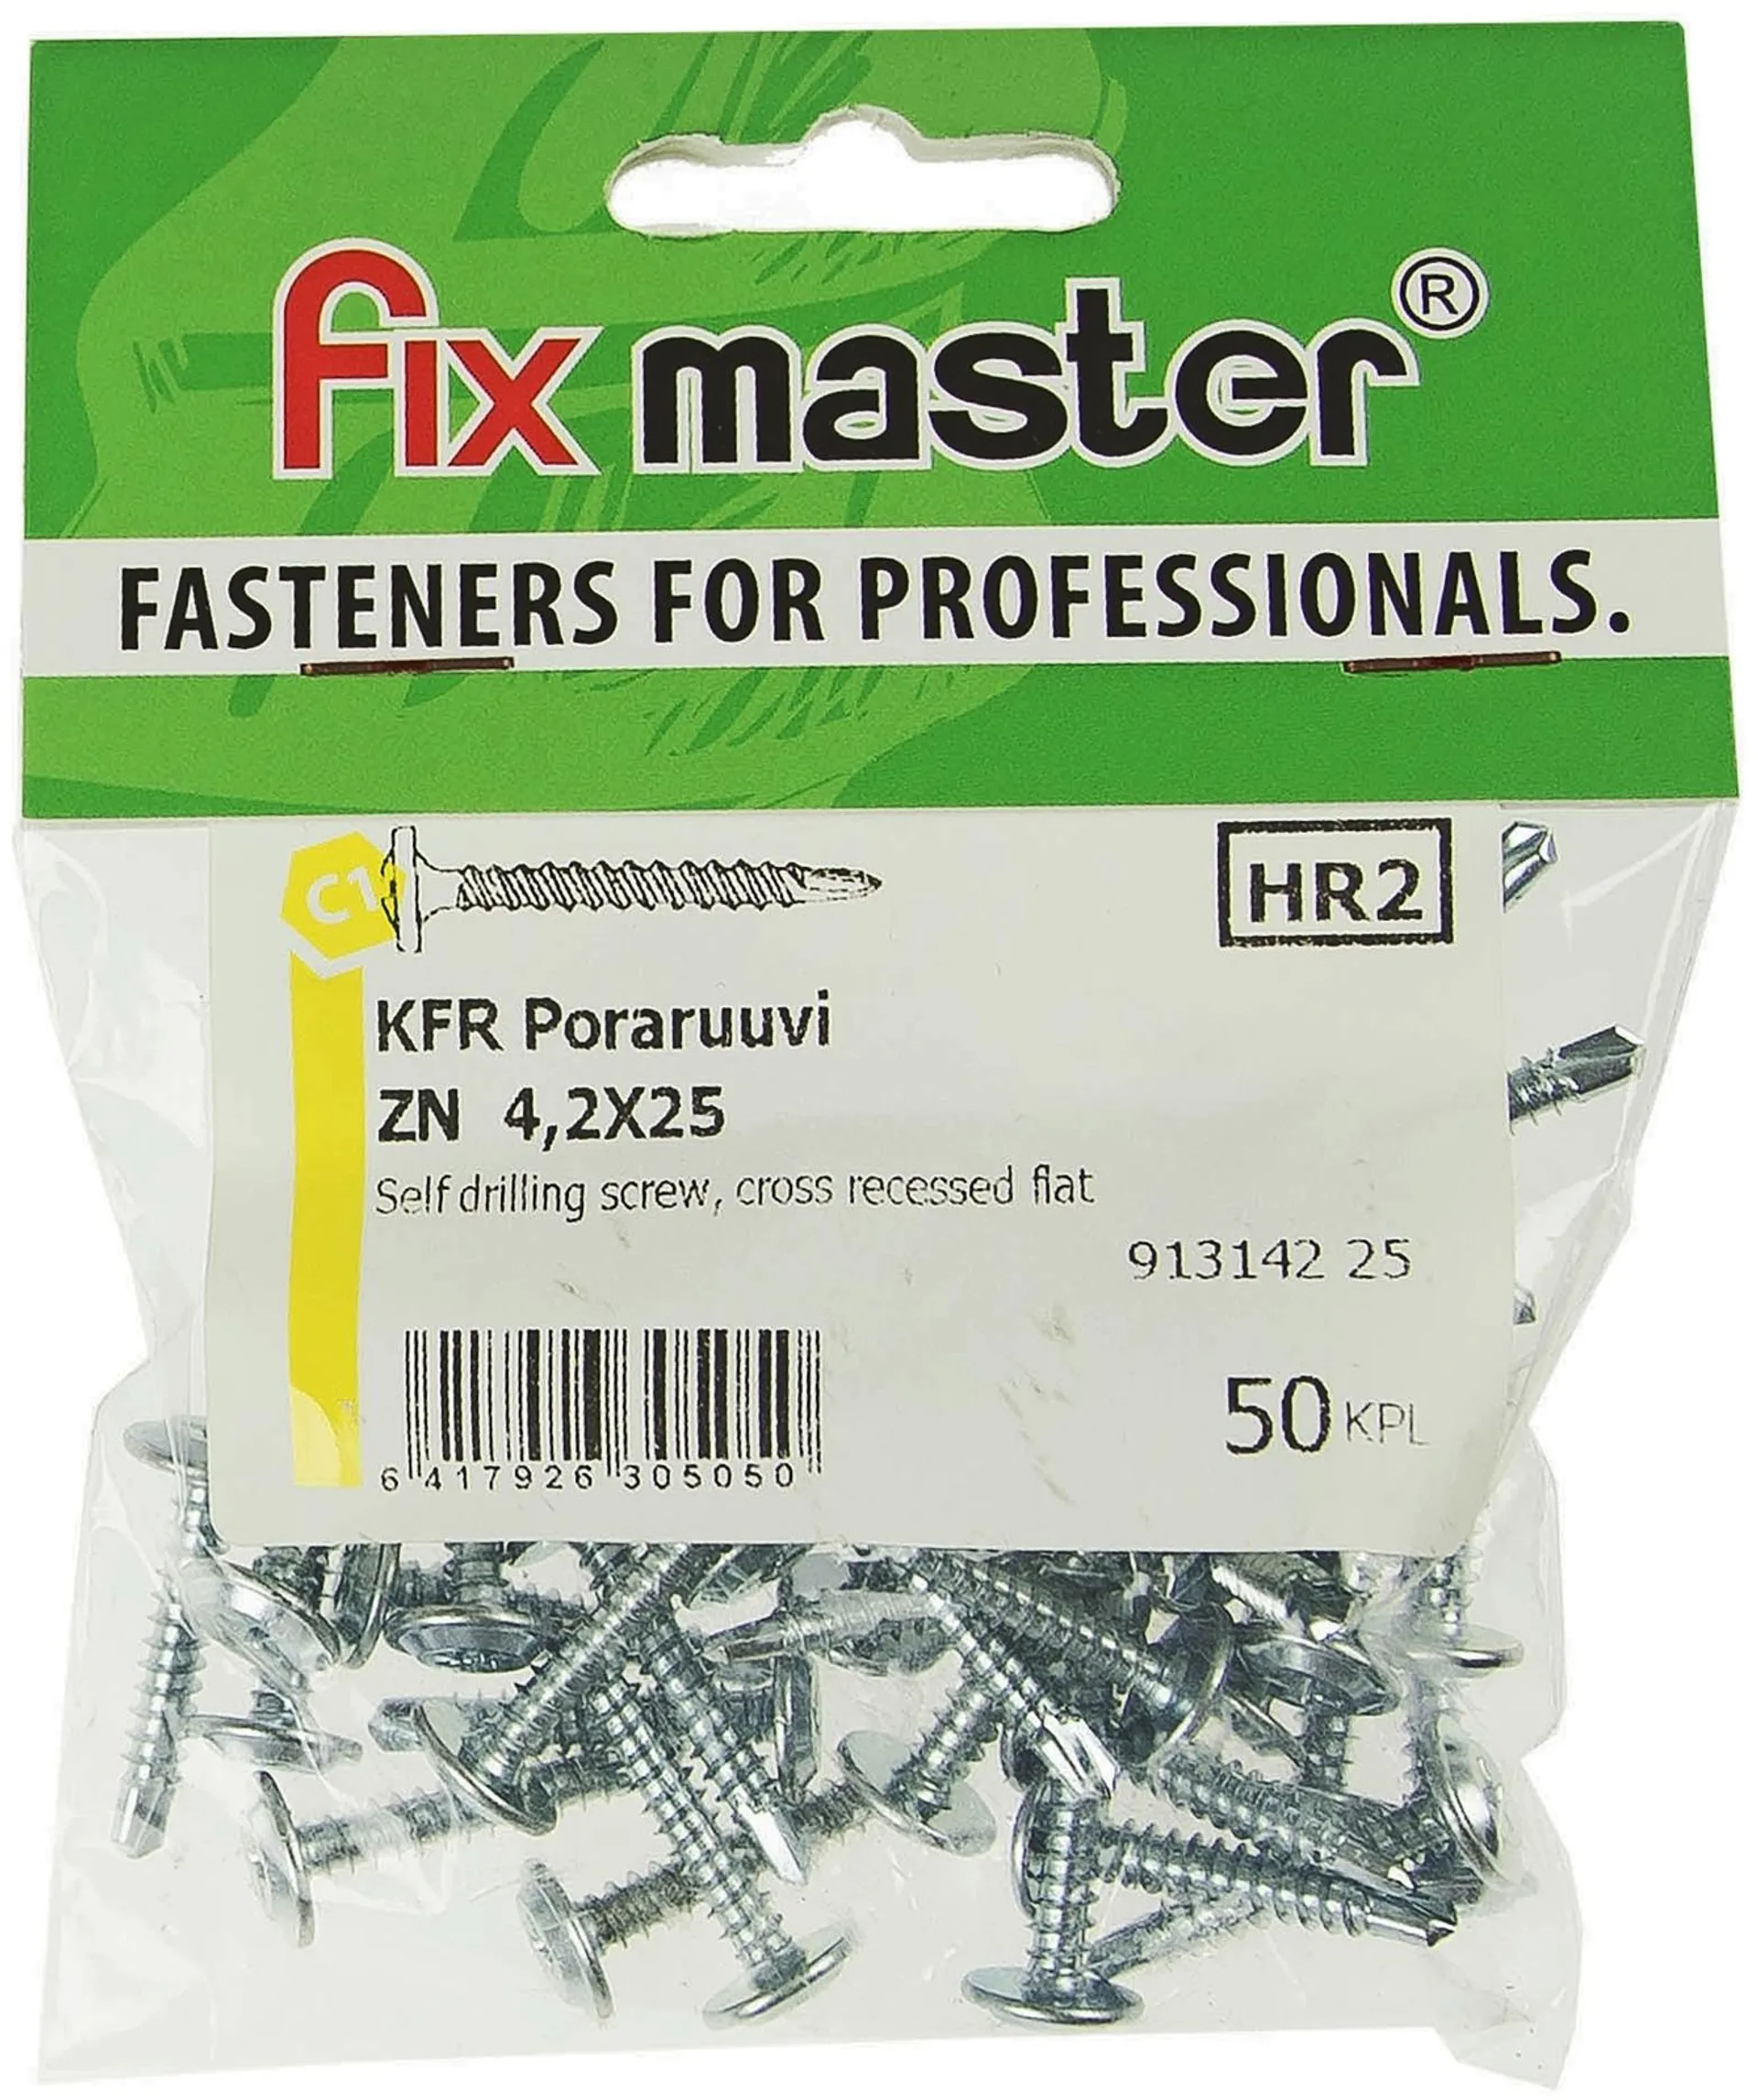 Fix Master KFR poraruuvi 4,2X25 sinkitty 50kpl